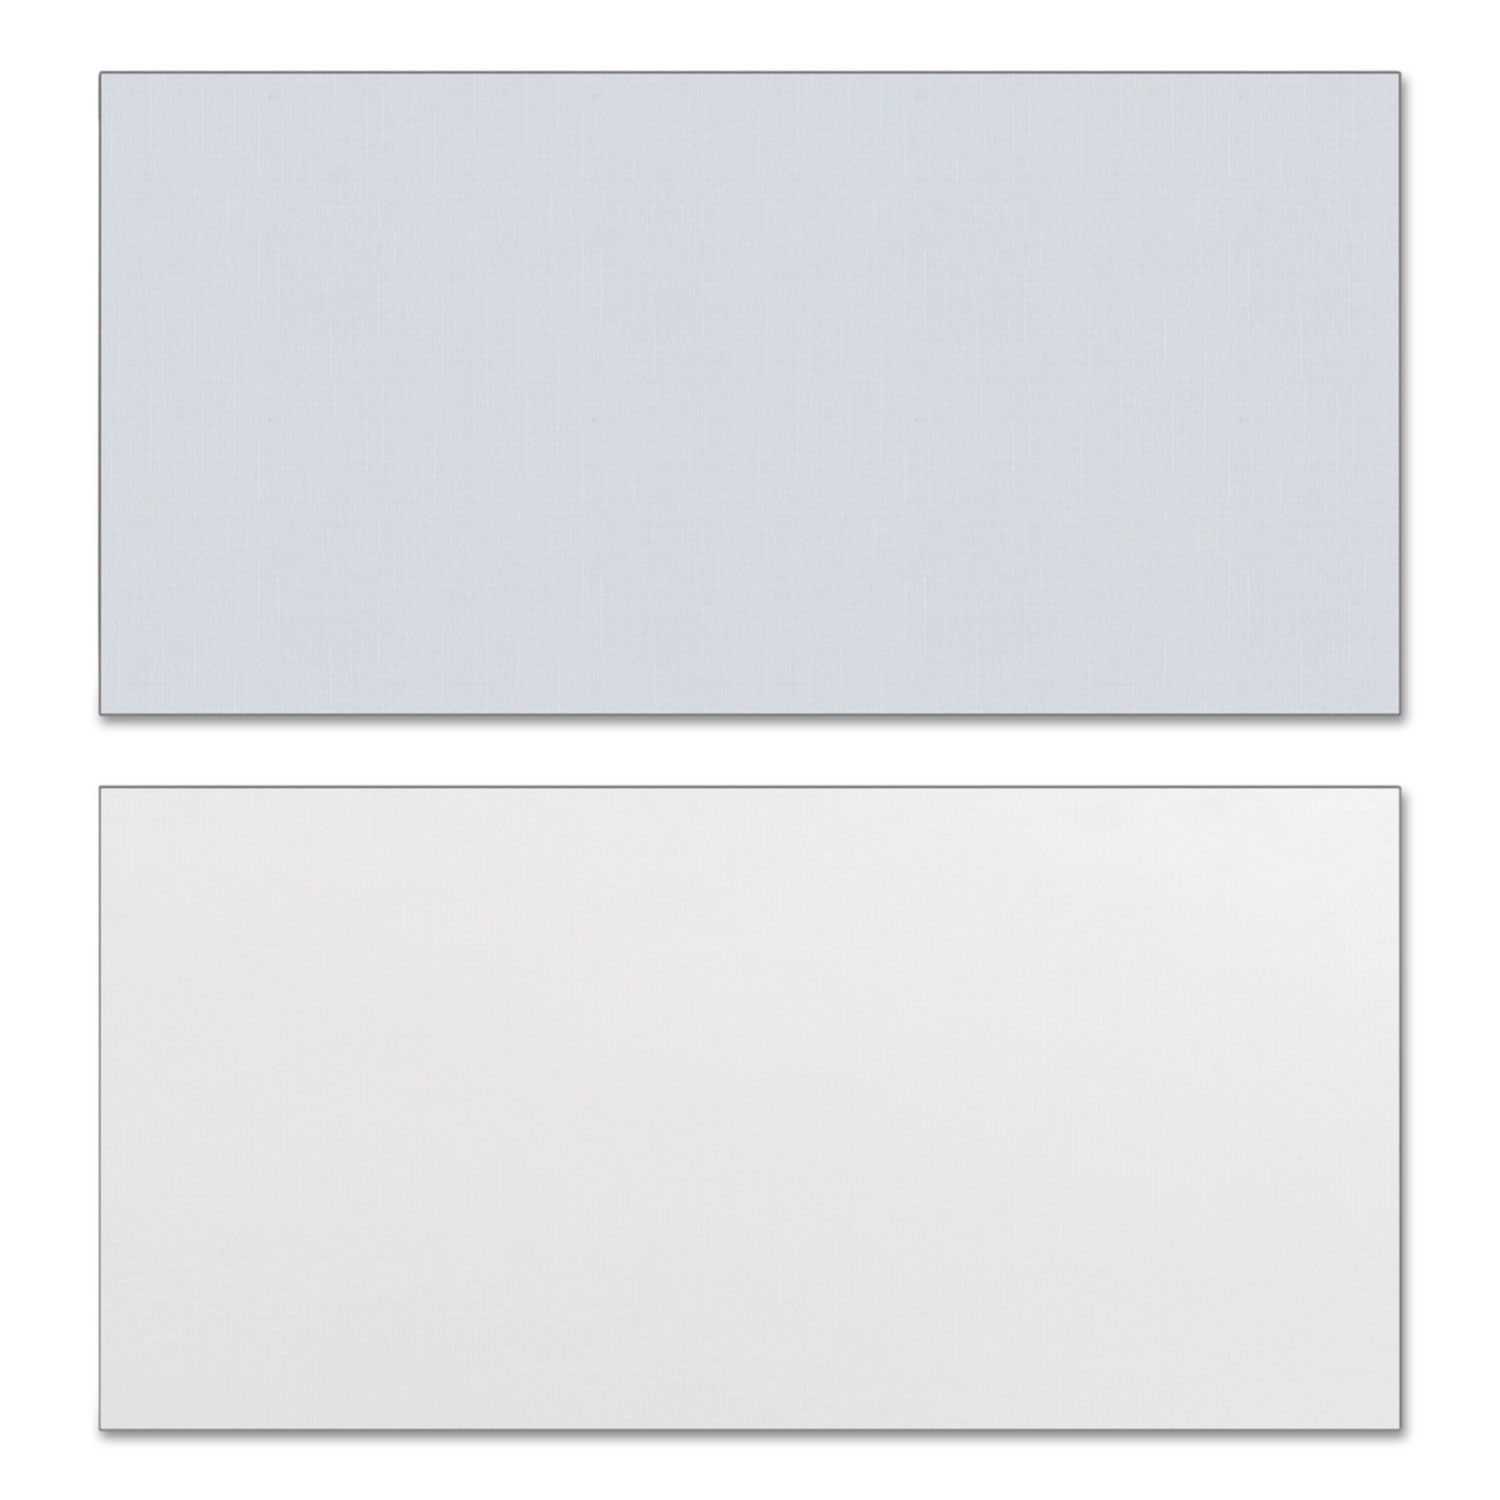 Reversible Laminate Table Top, Rectangular, 47 5/8w x 23 5/8d, White/Gray